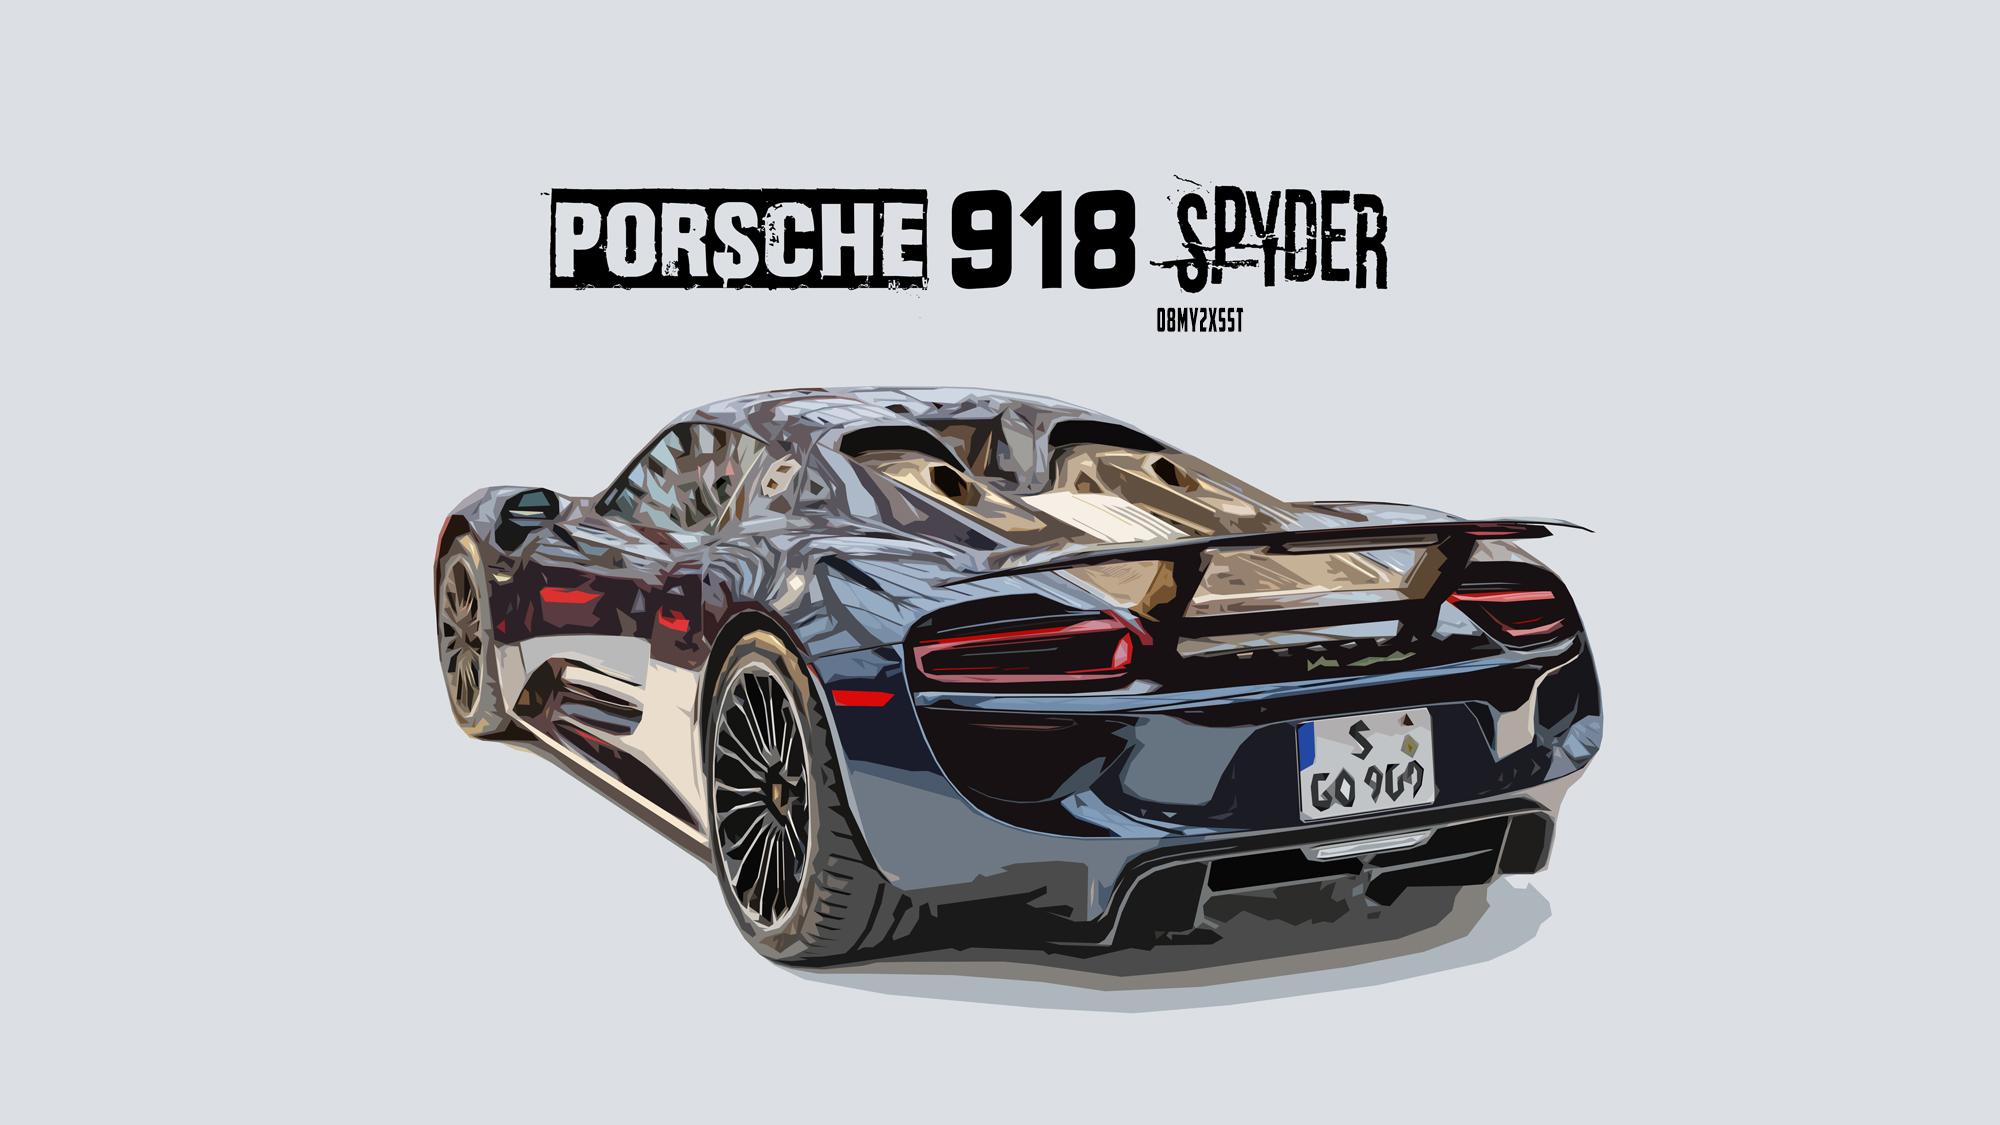 Porsche 918 Spyder Wallpaper, Picture, Image